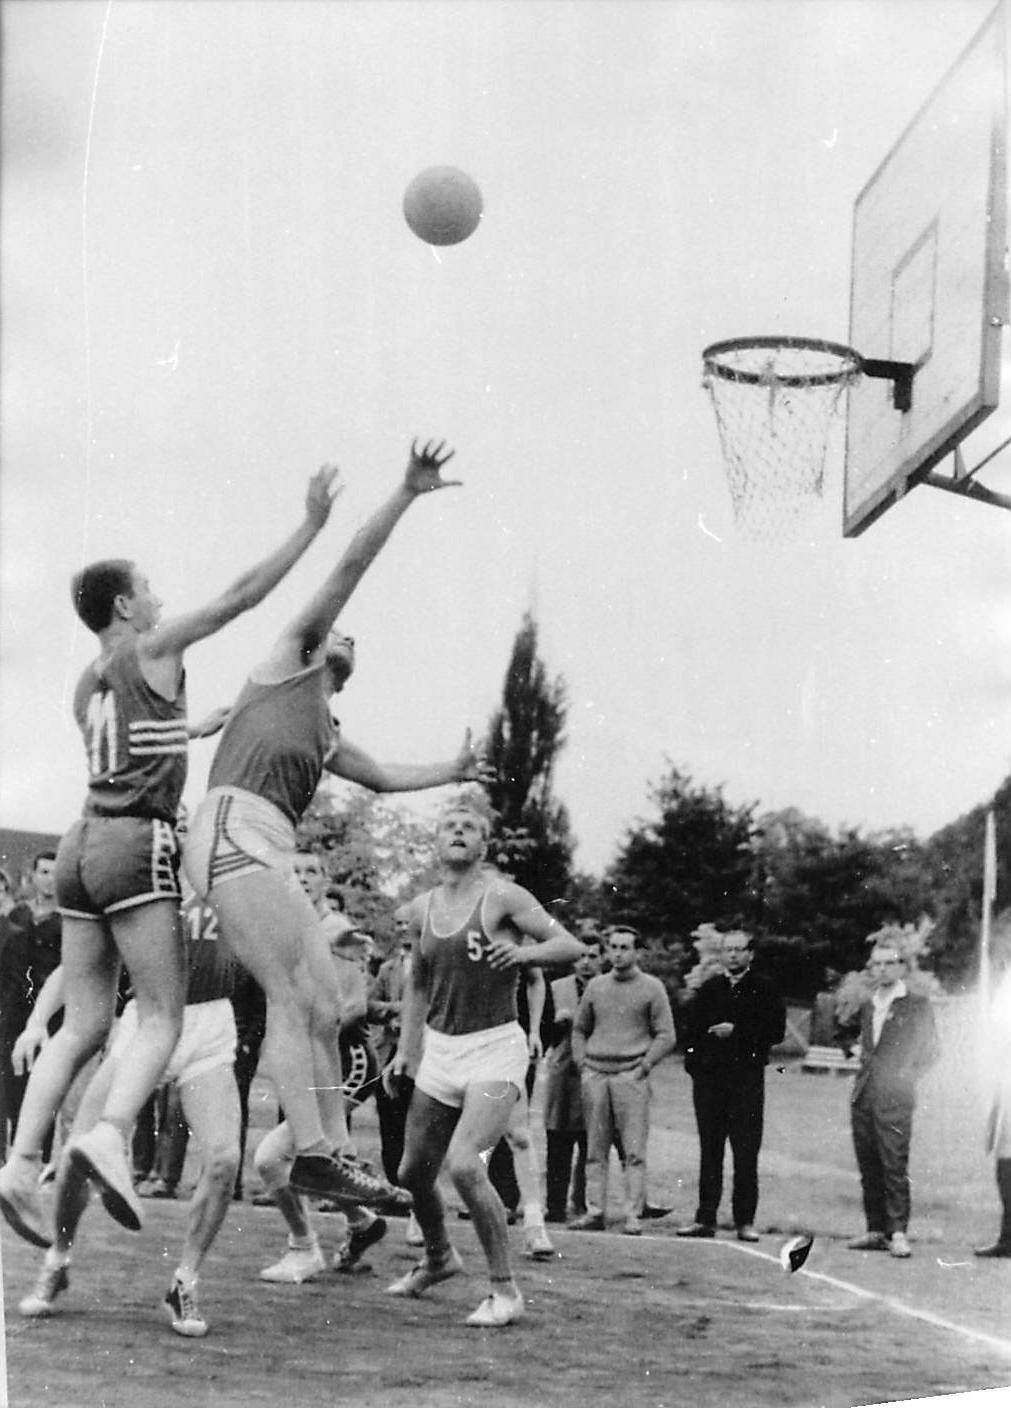 1973 Okt. - Unisportfest Basketball